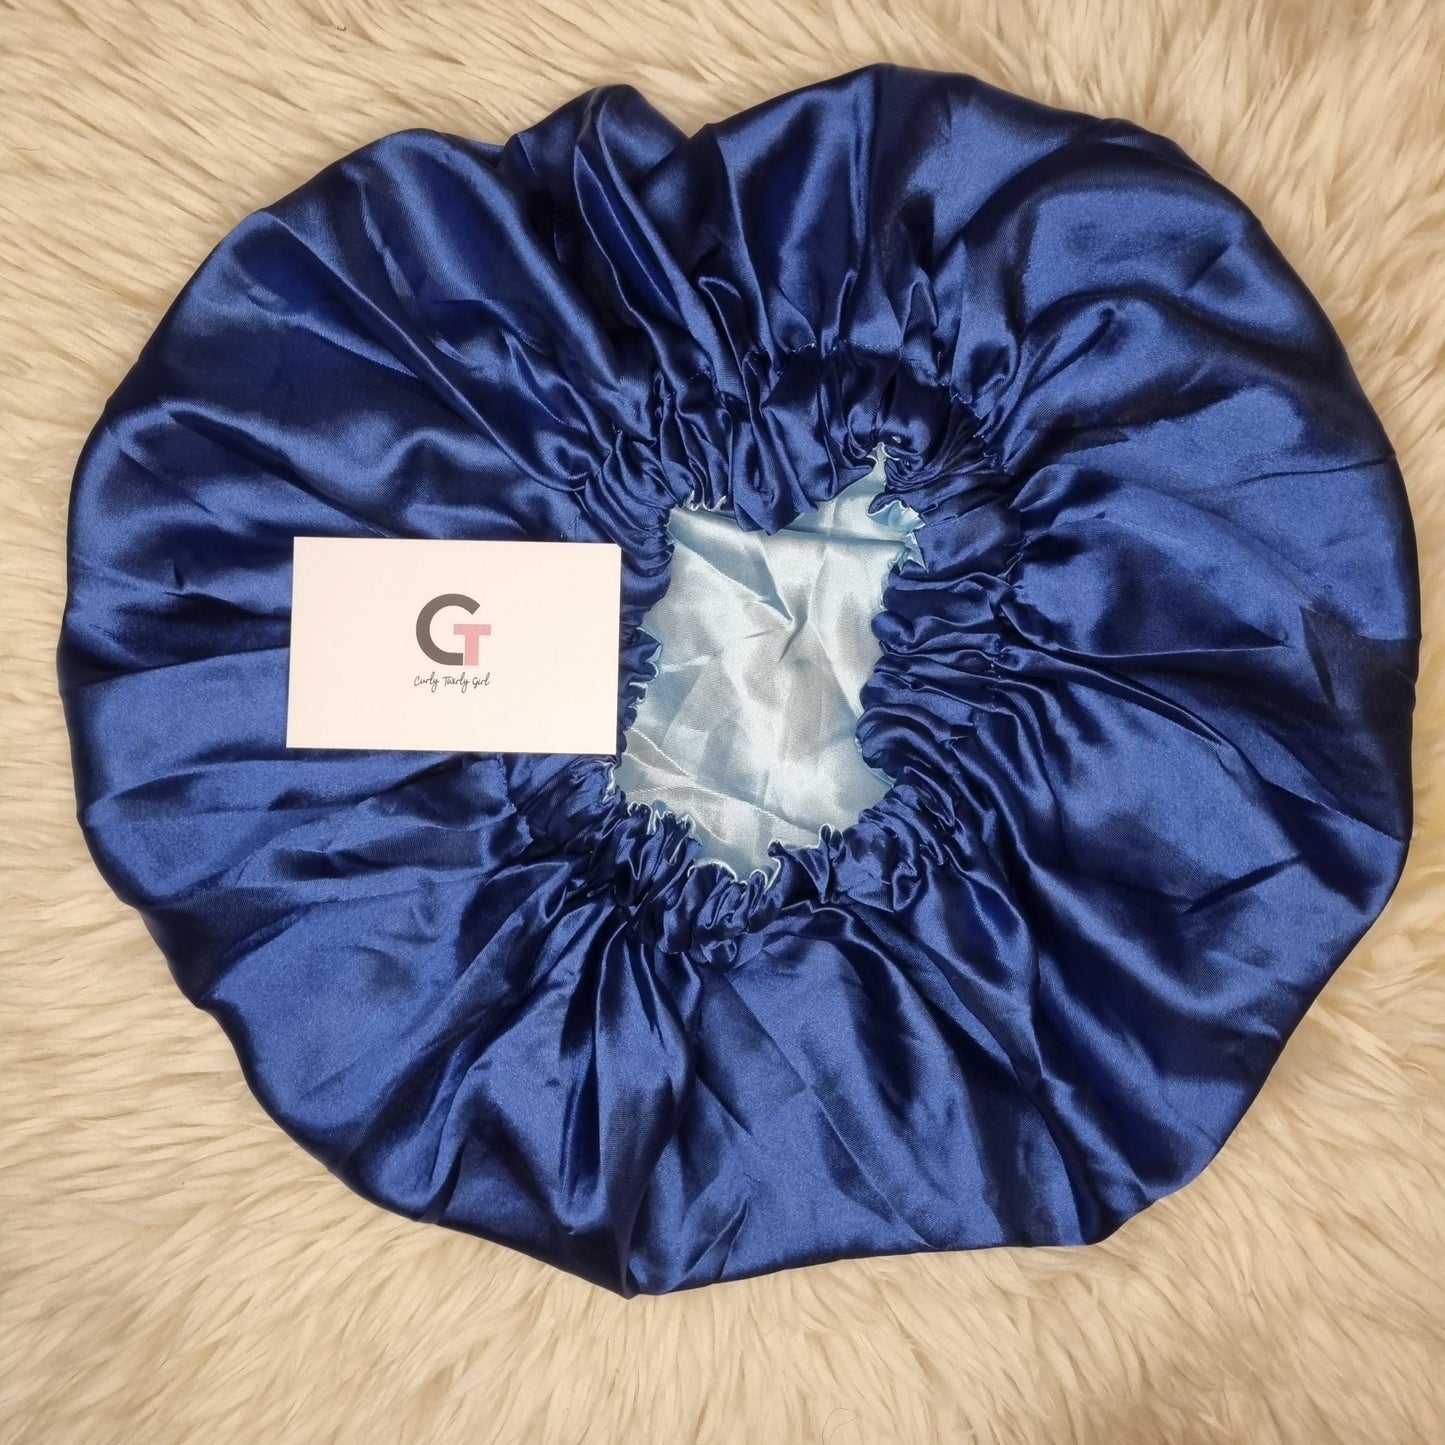 Royal blue reversible satin bonnet on cream rug